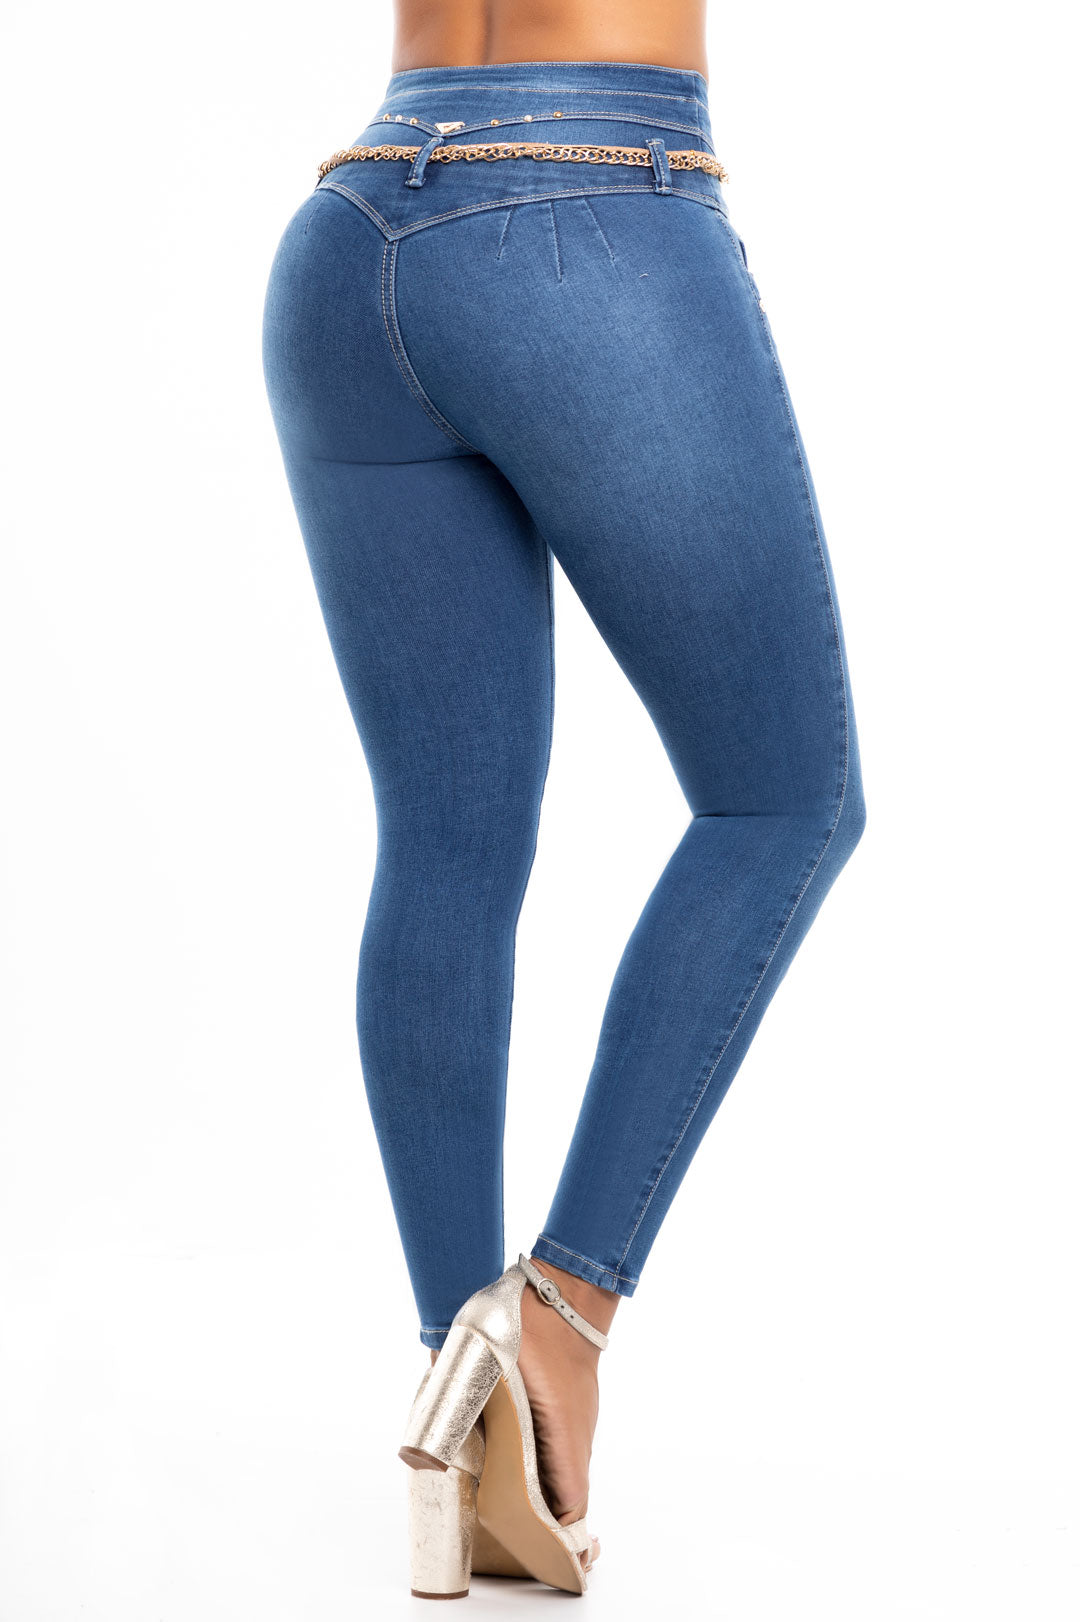 JEANS COLOMBIANOS KA1152 Authentic Colombian Push Up Jeans, jean Levanta  faja